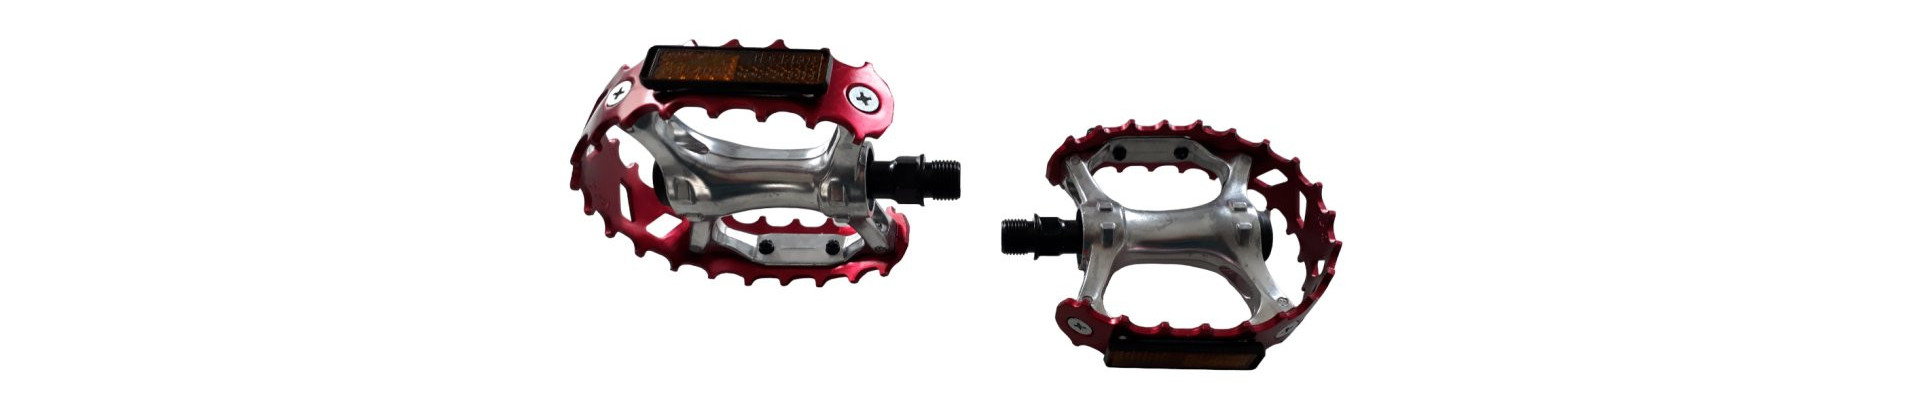 BMX freestyle flat pedals